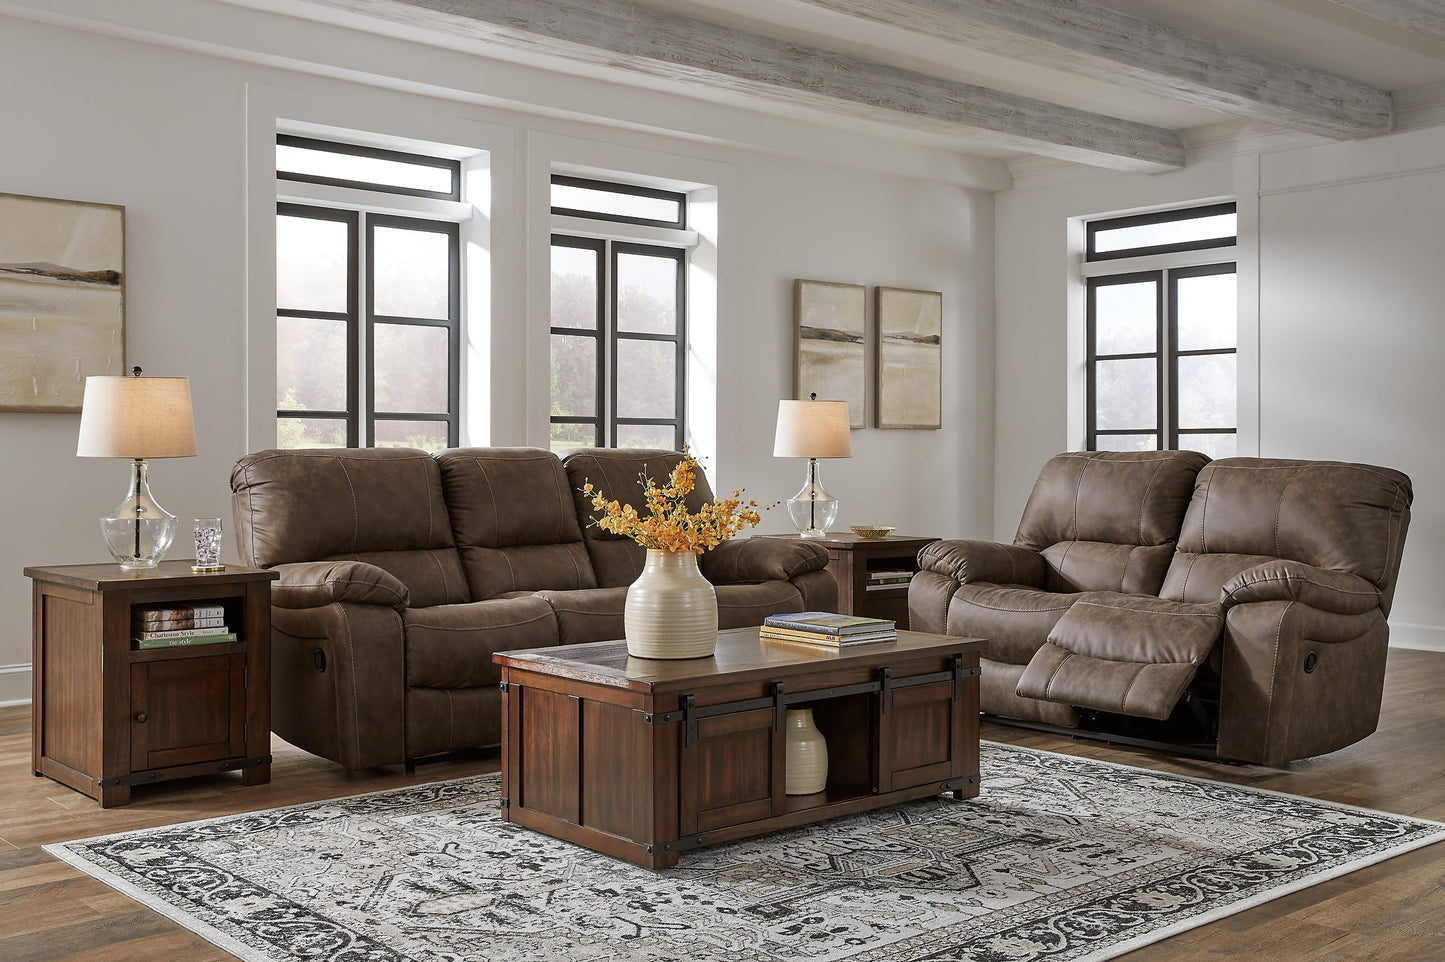 Kilmartin Sofa and Loveseat at Cloud 9 Mattress & Furniture furniture, home furnishing, home decor